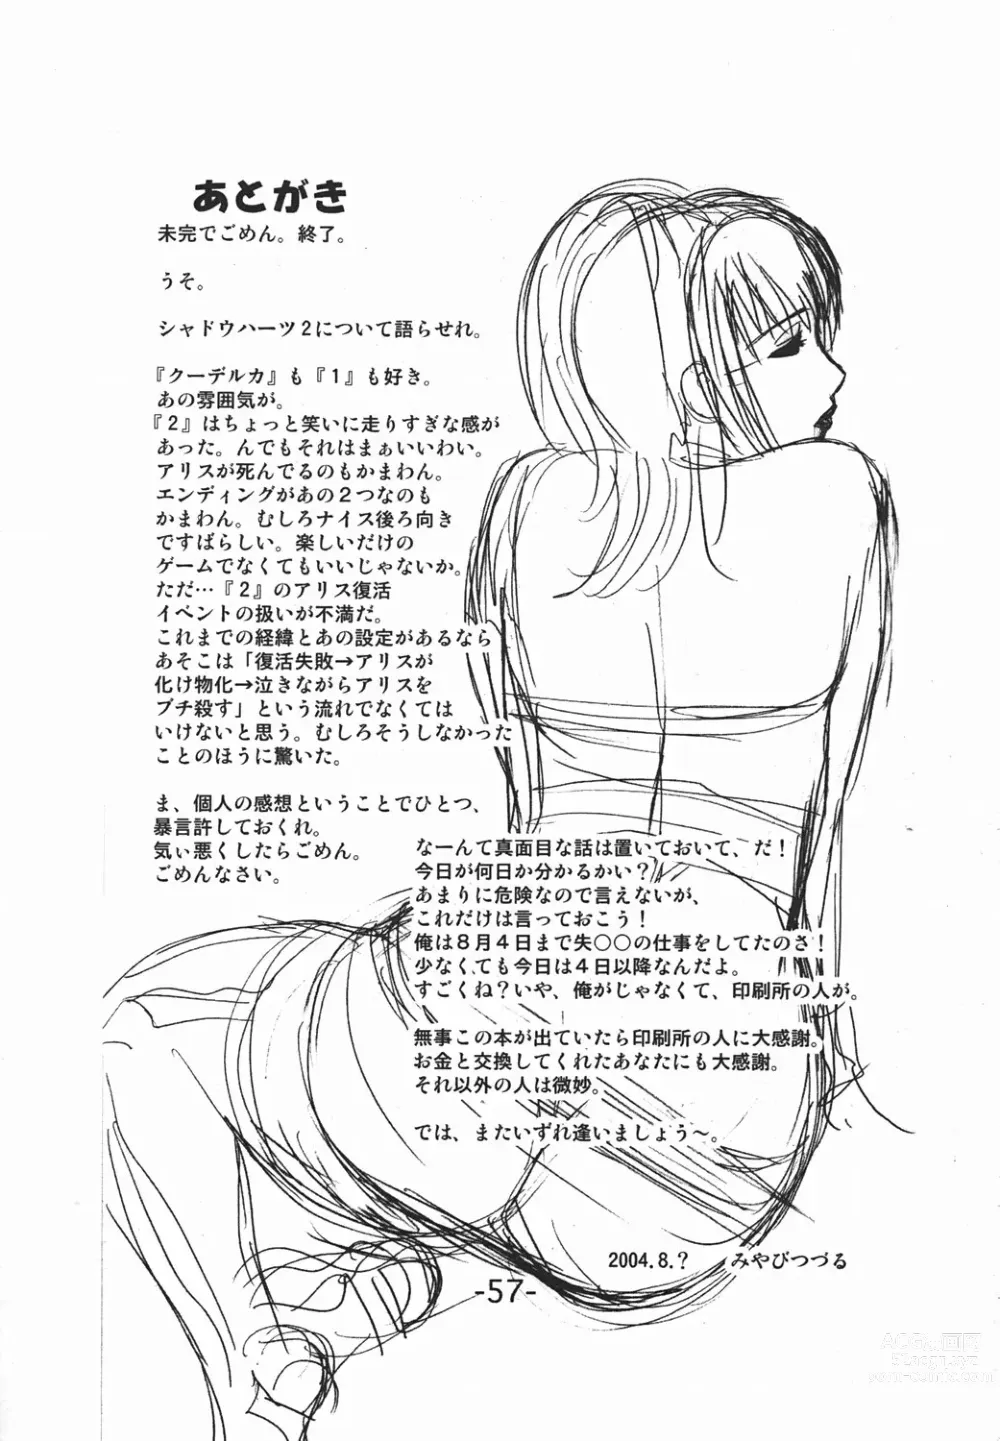 Page 57 of doujinshi Anne no Nikki